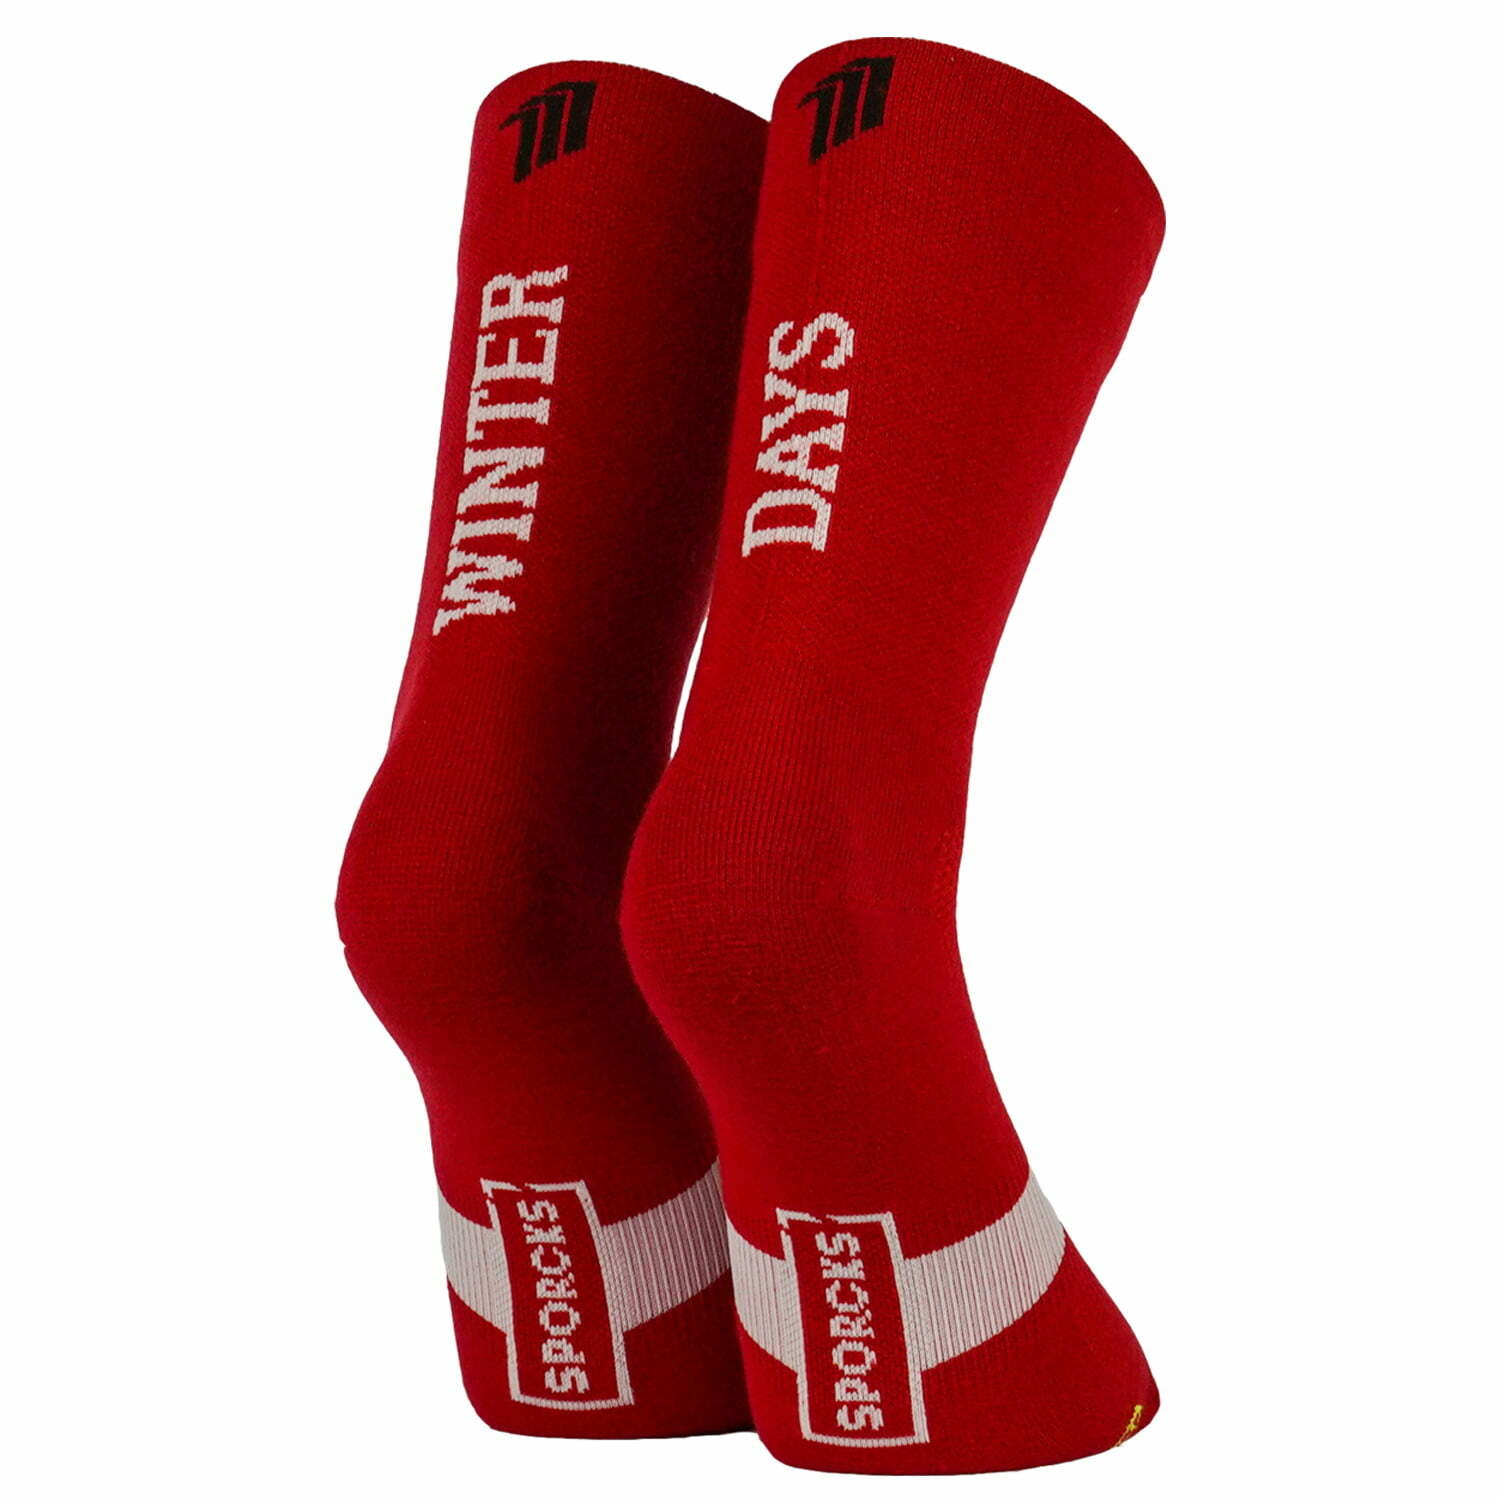 red cycling socks